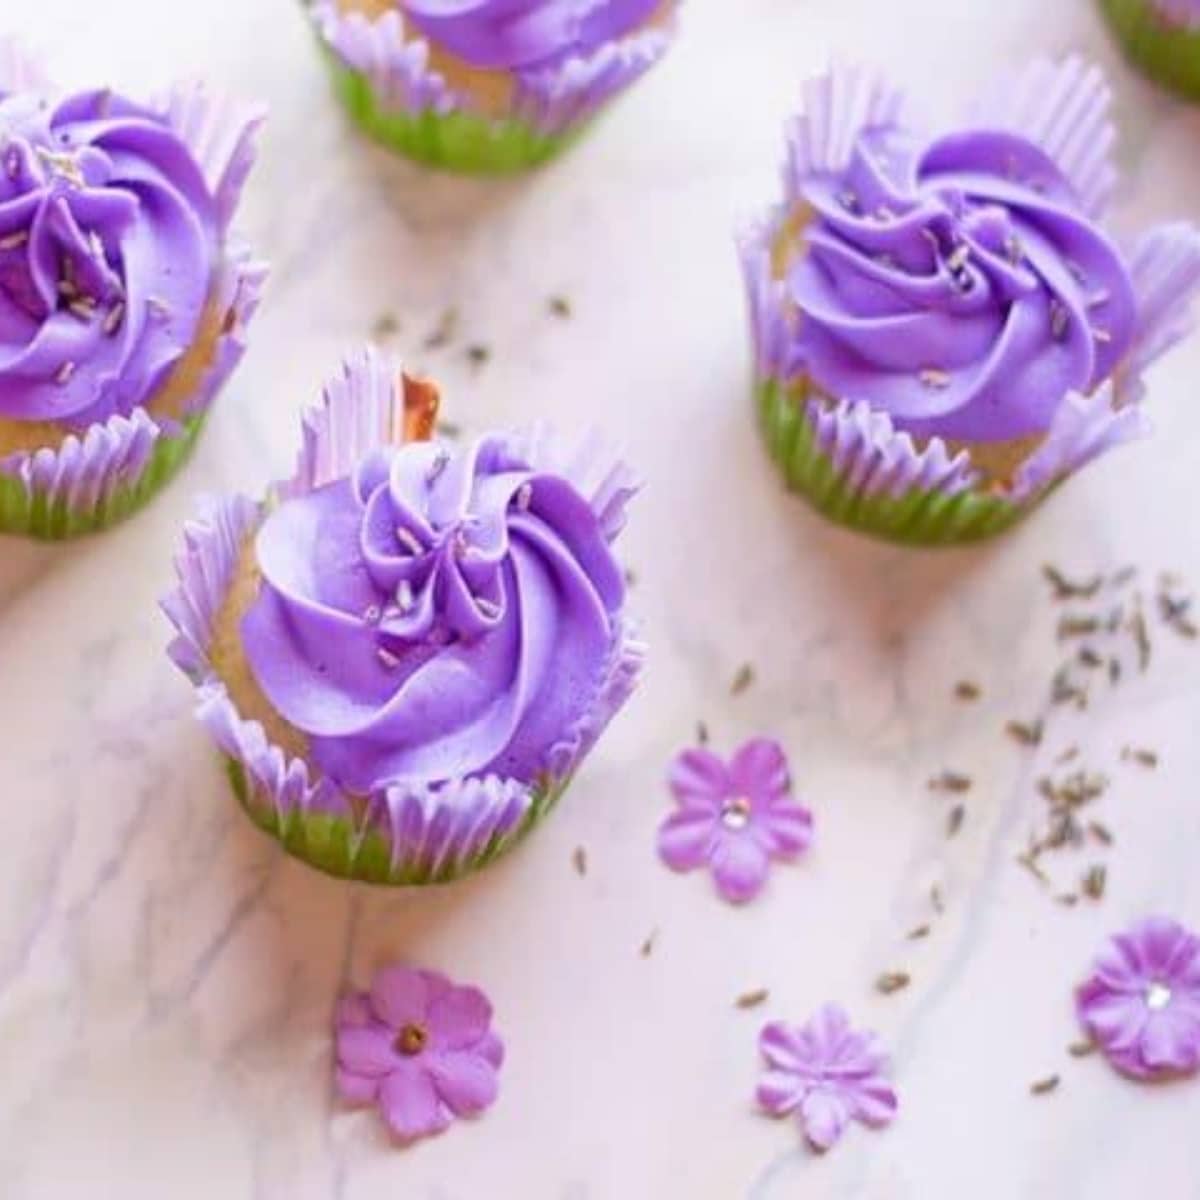 Lemon Lavender Cake Recipe - Sugar & Sparrow